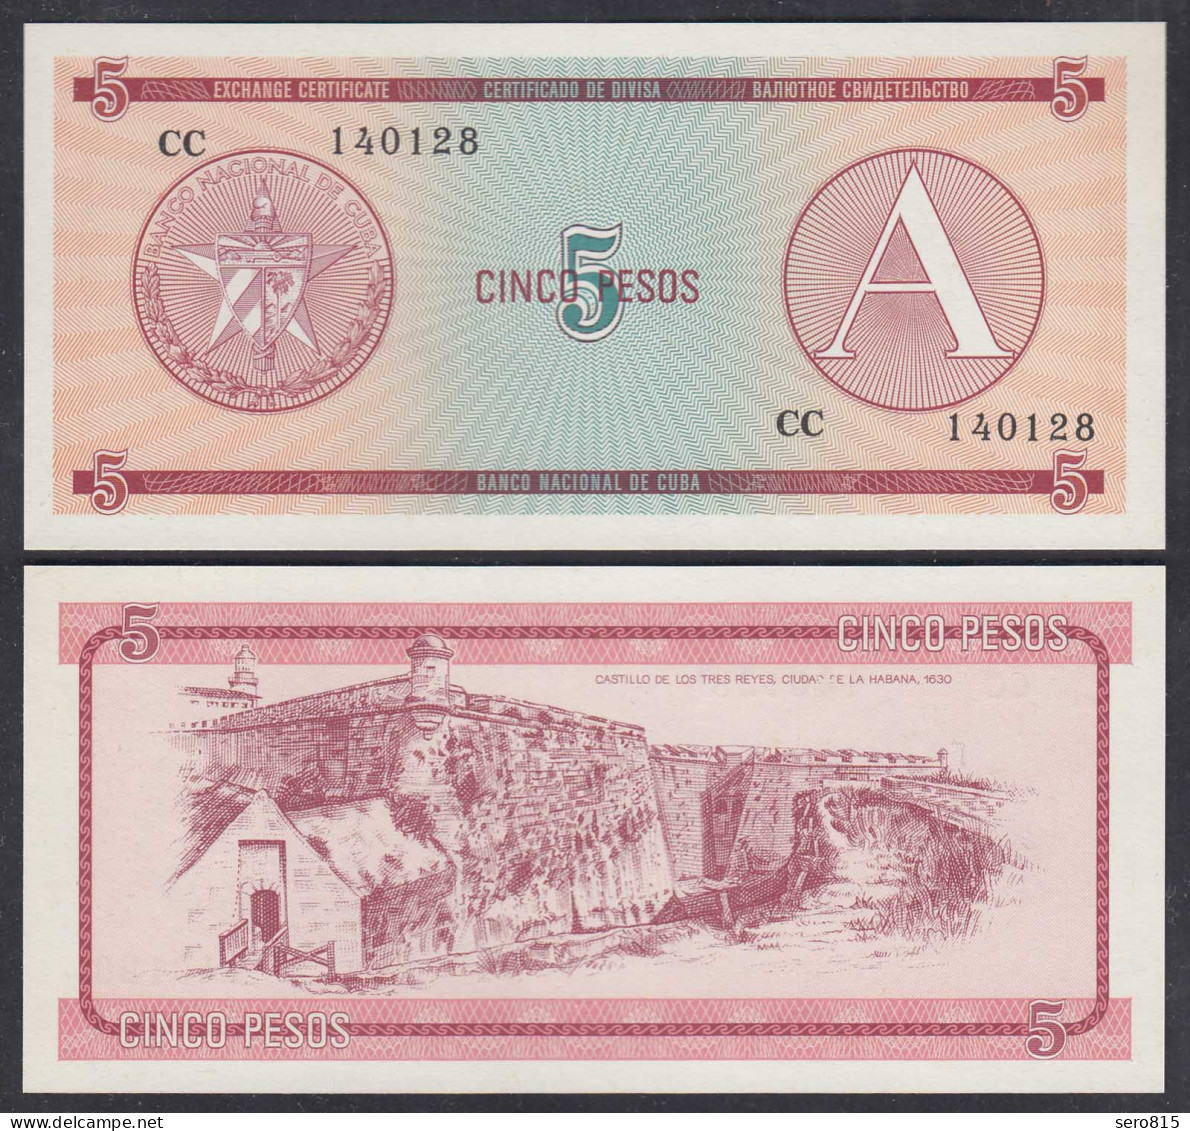 Kuba - Cuba 5 Peso Foreign Exchange Certificates 1985 Pick FX3 UNC (1)  (26793 - Other - America